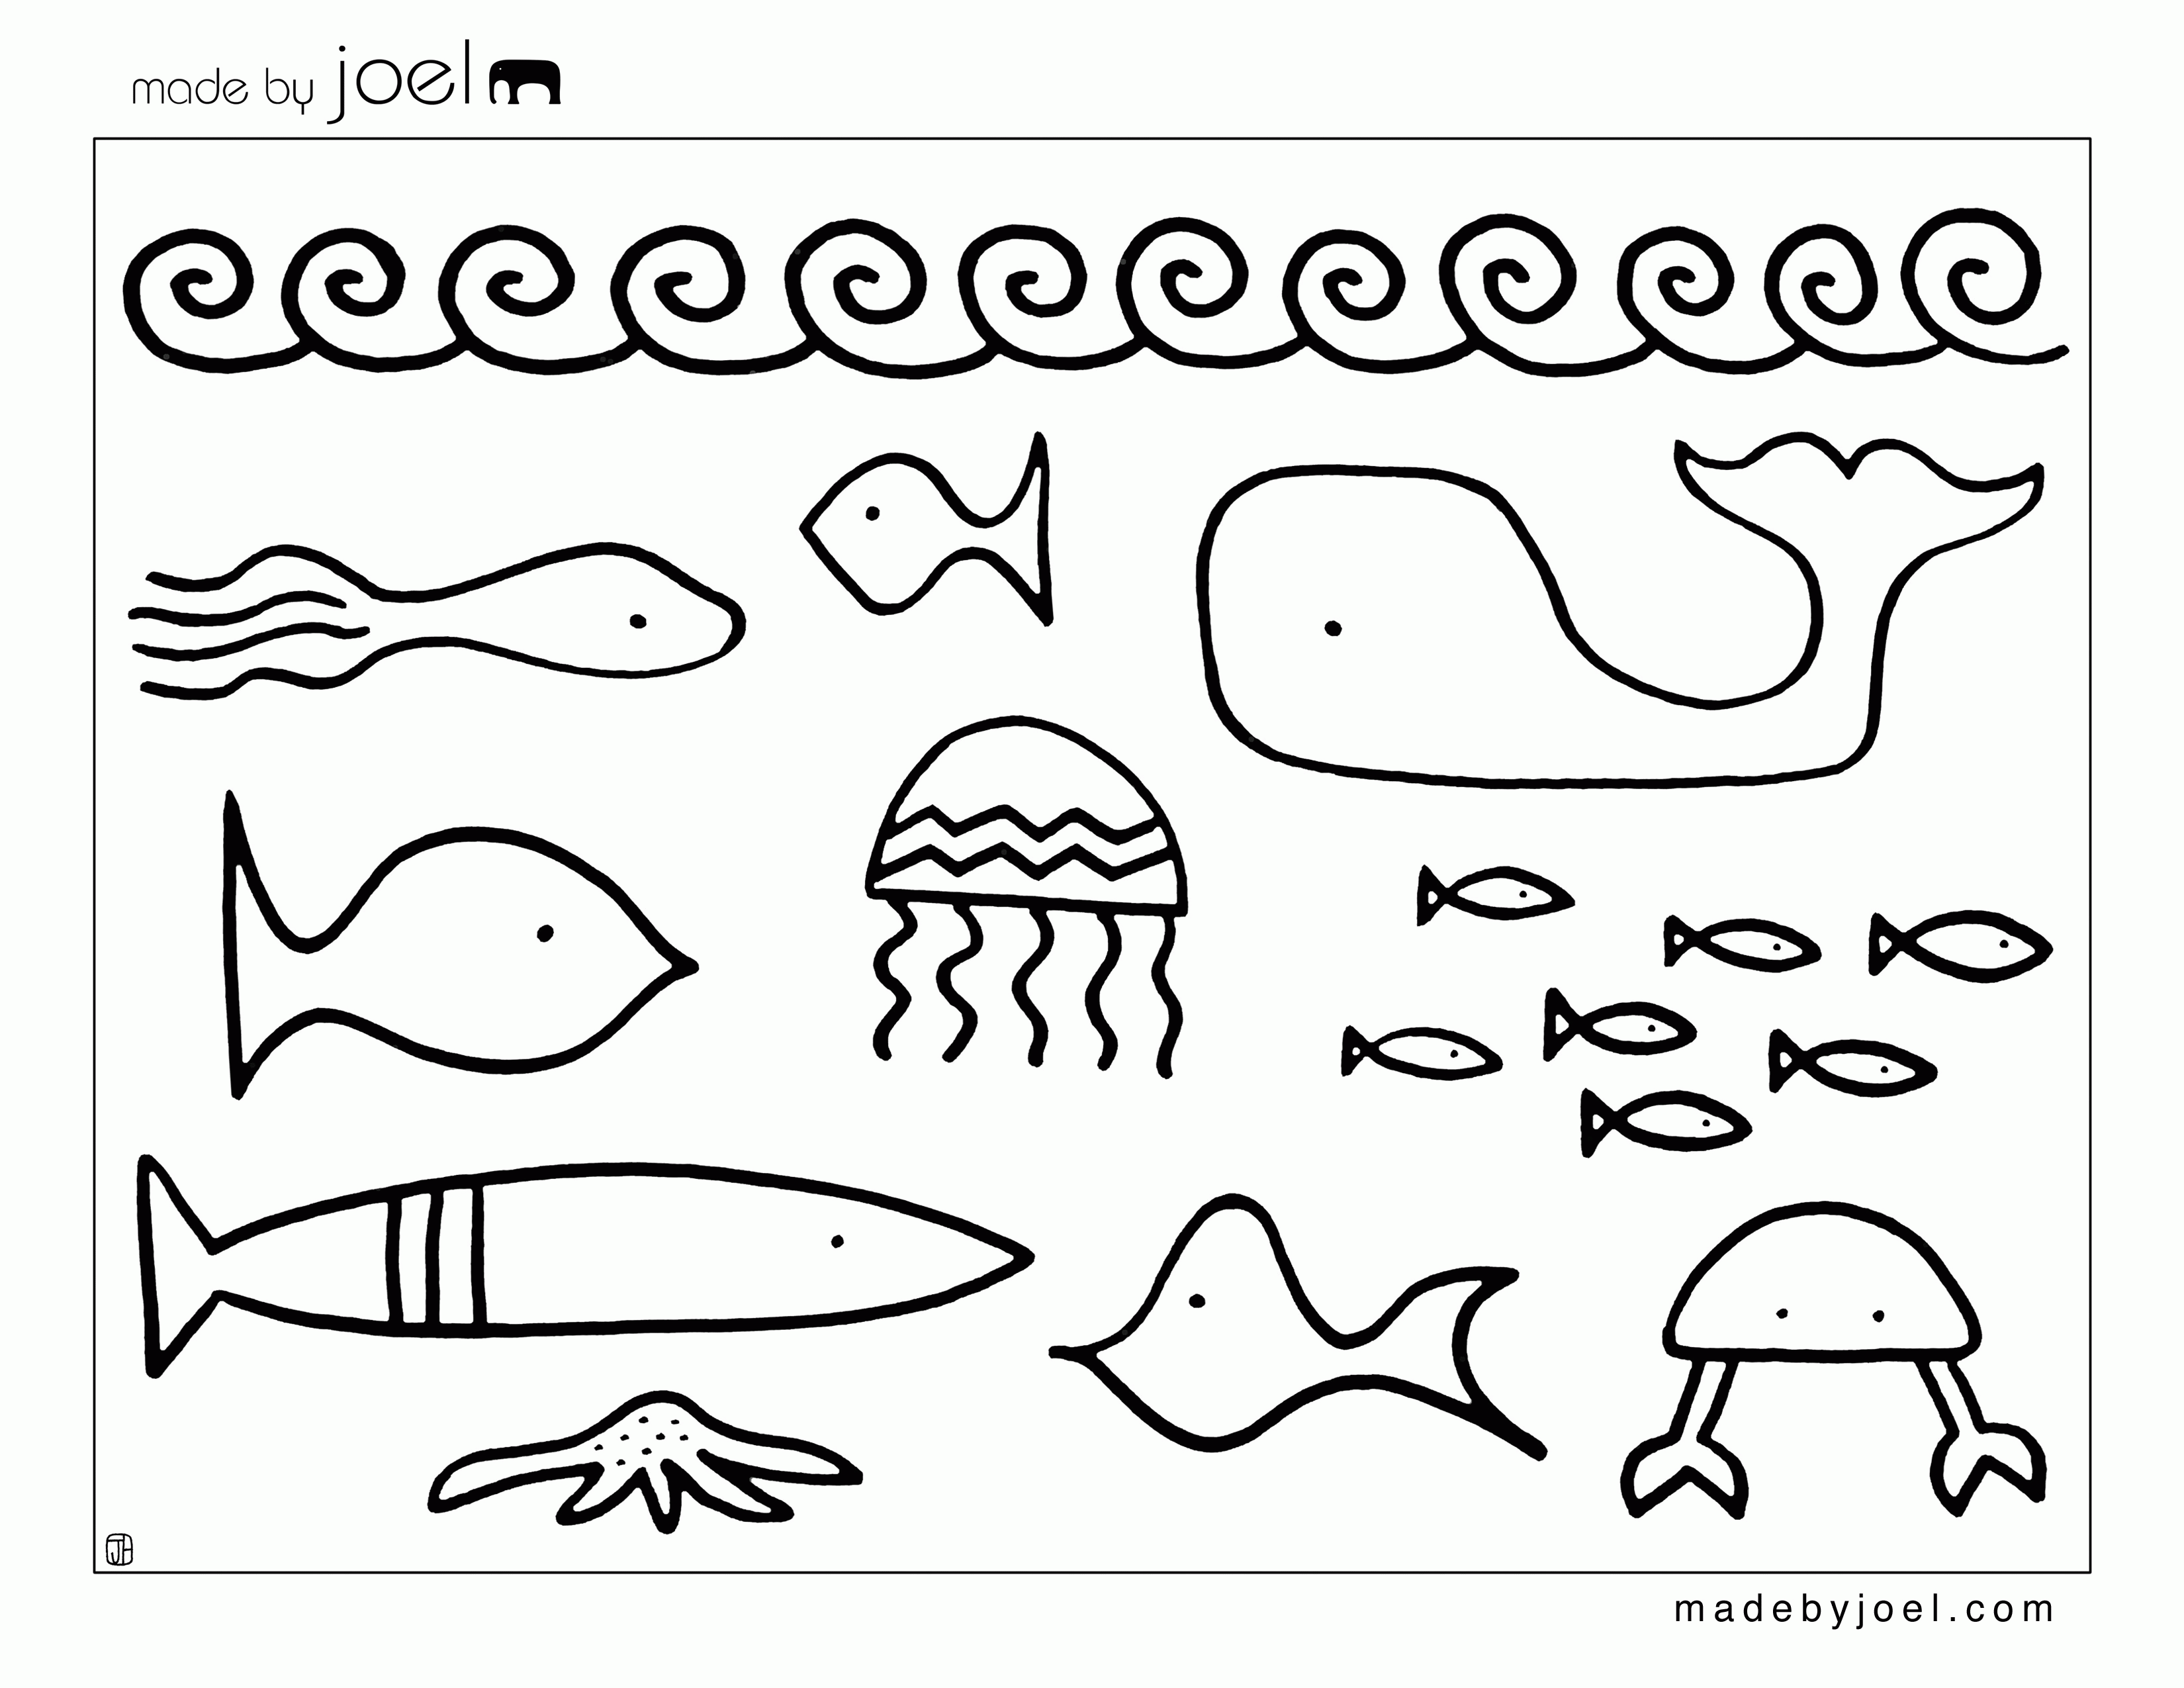 Blackfish Cafe Coloring Sheets - Made by Joel - Fish Pattern